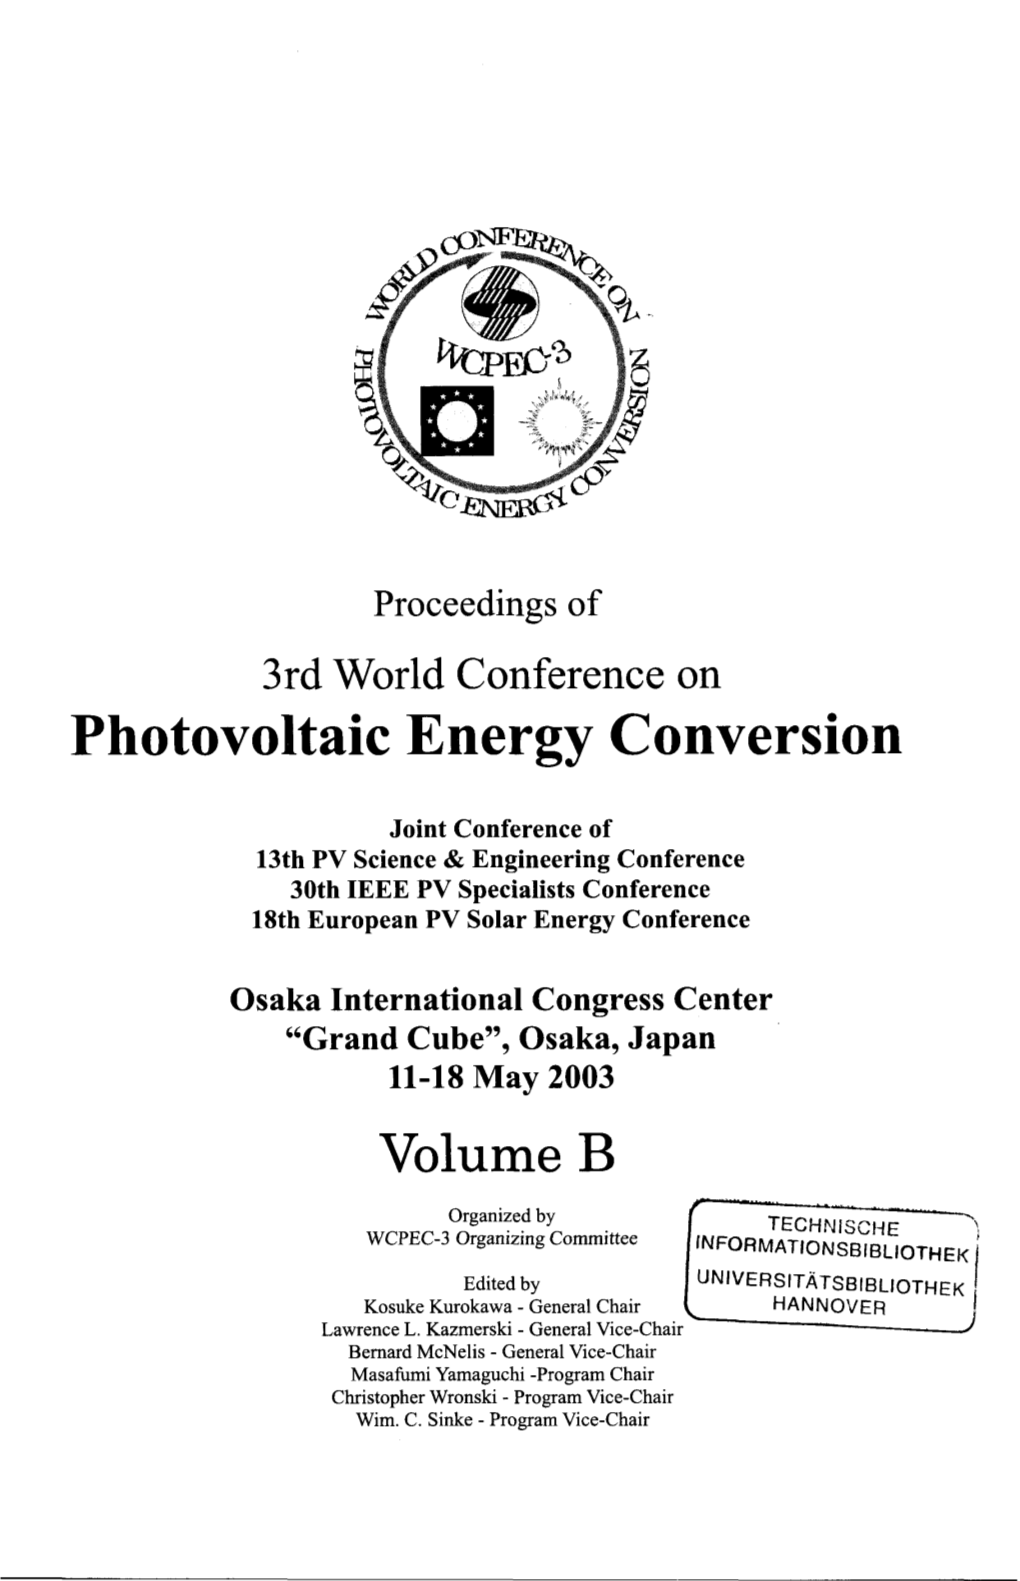 Photovoltaic Energy Conversion